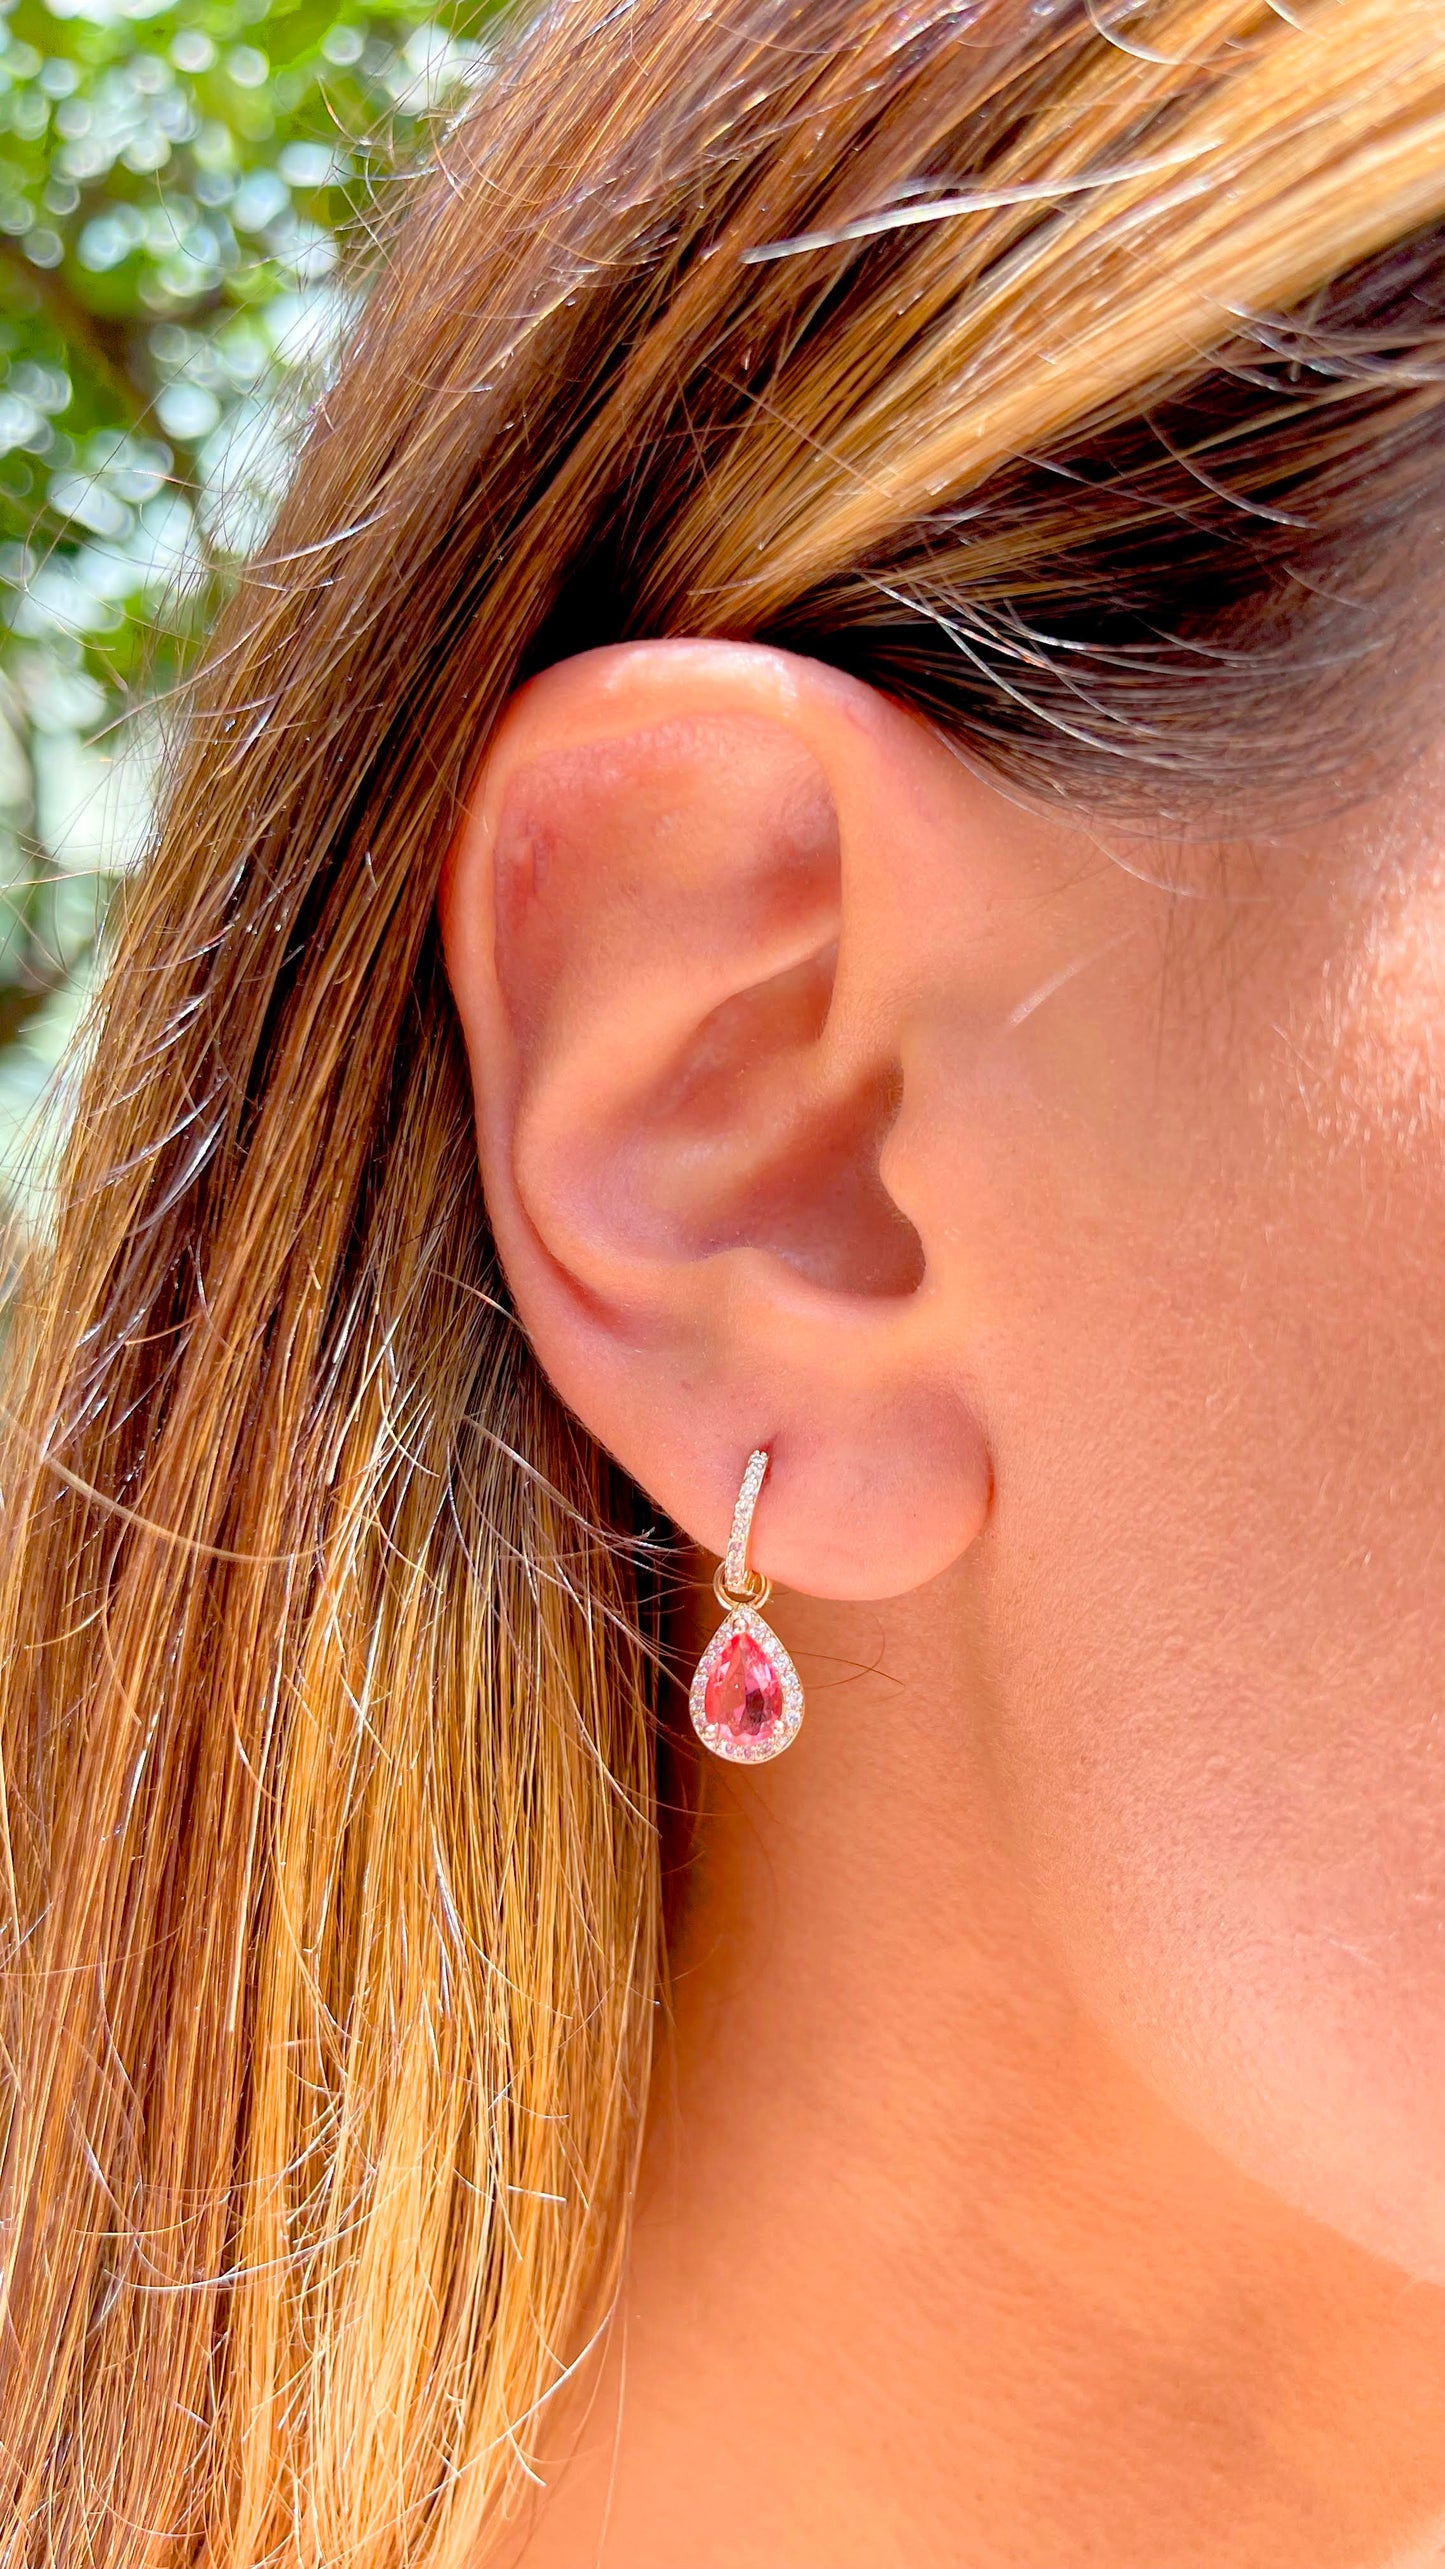 Hoop earring with pink tourmaline drop